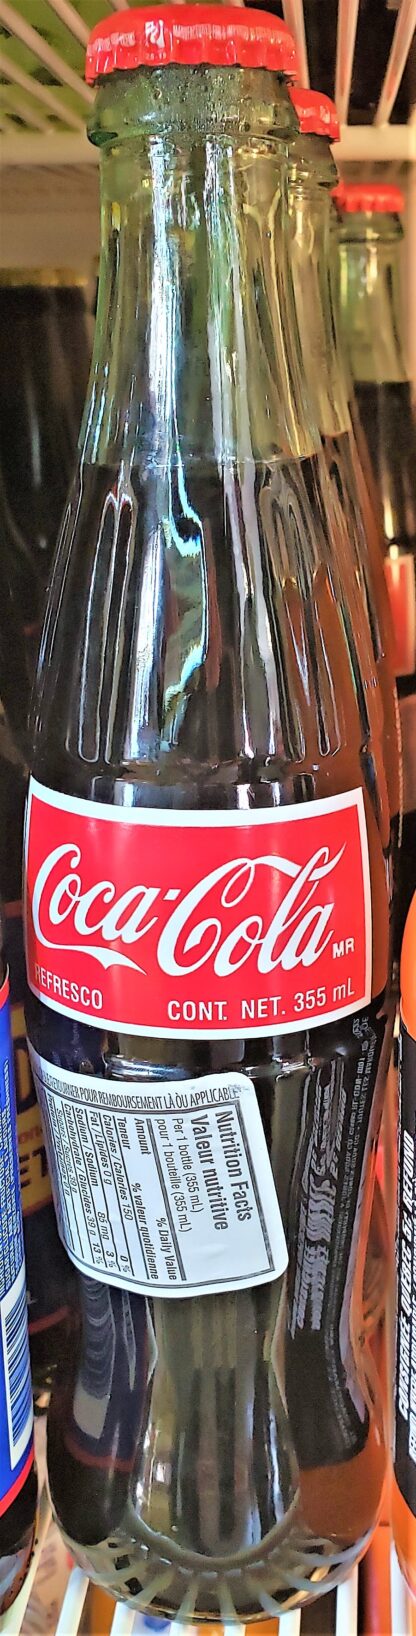 mexico coca cola bottle